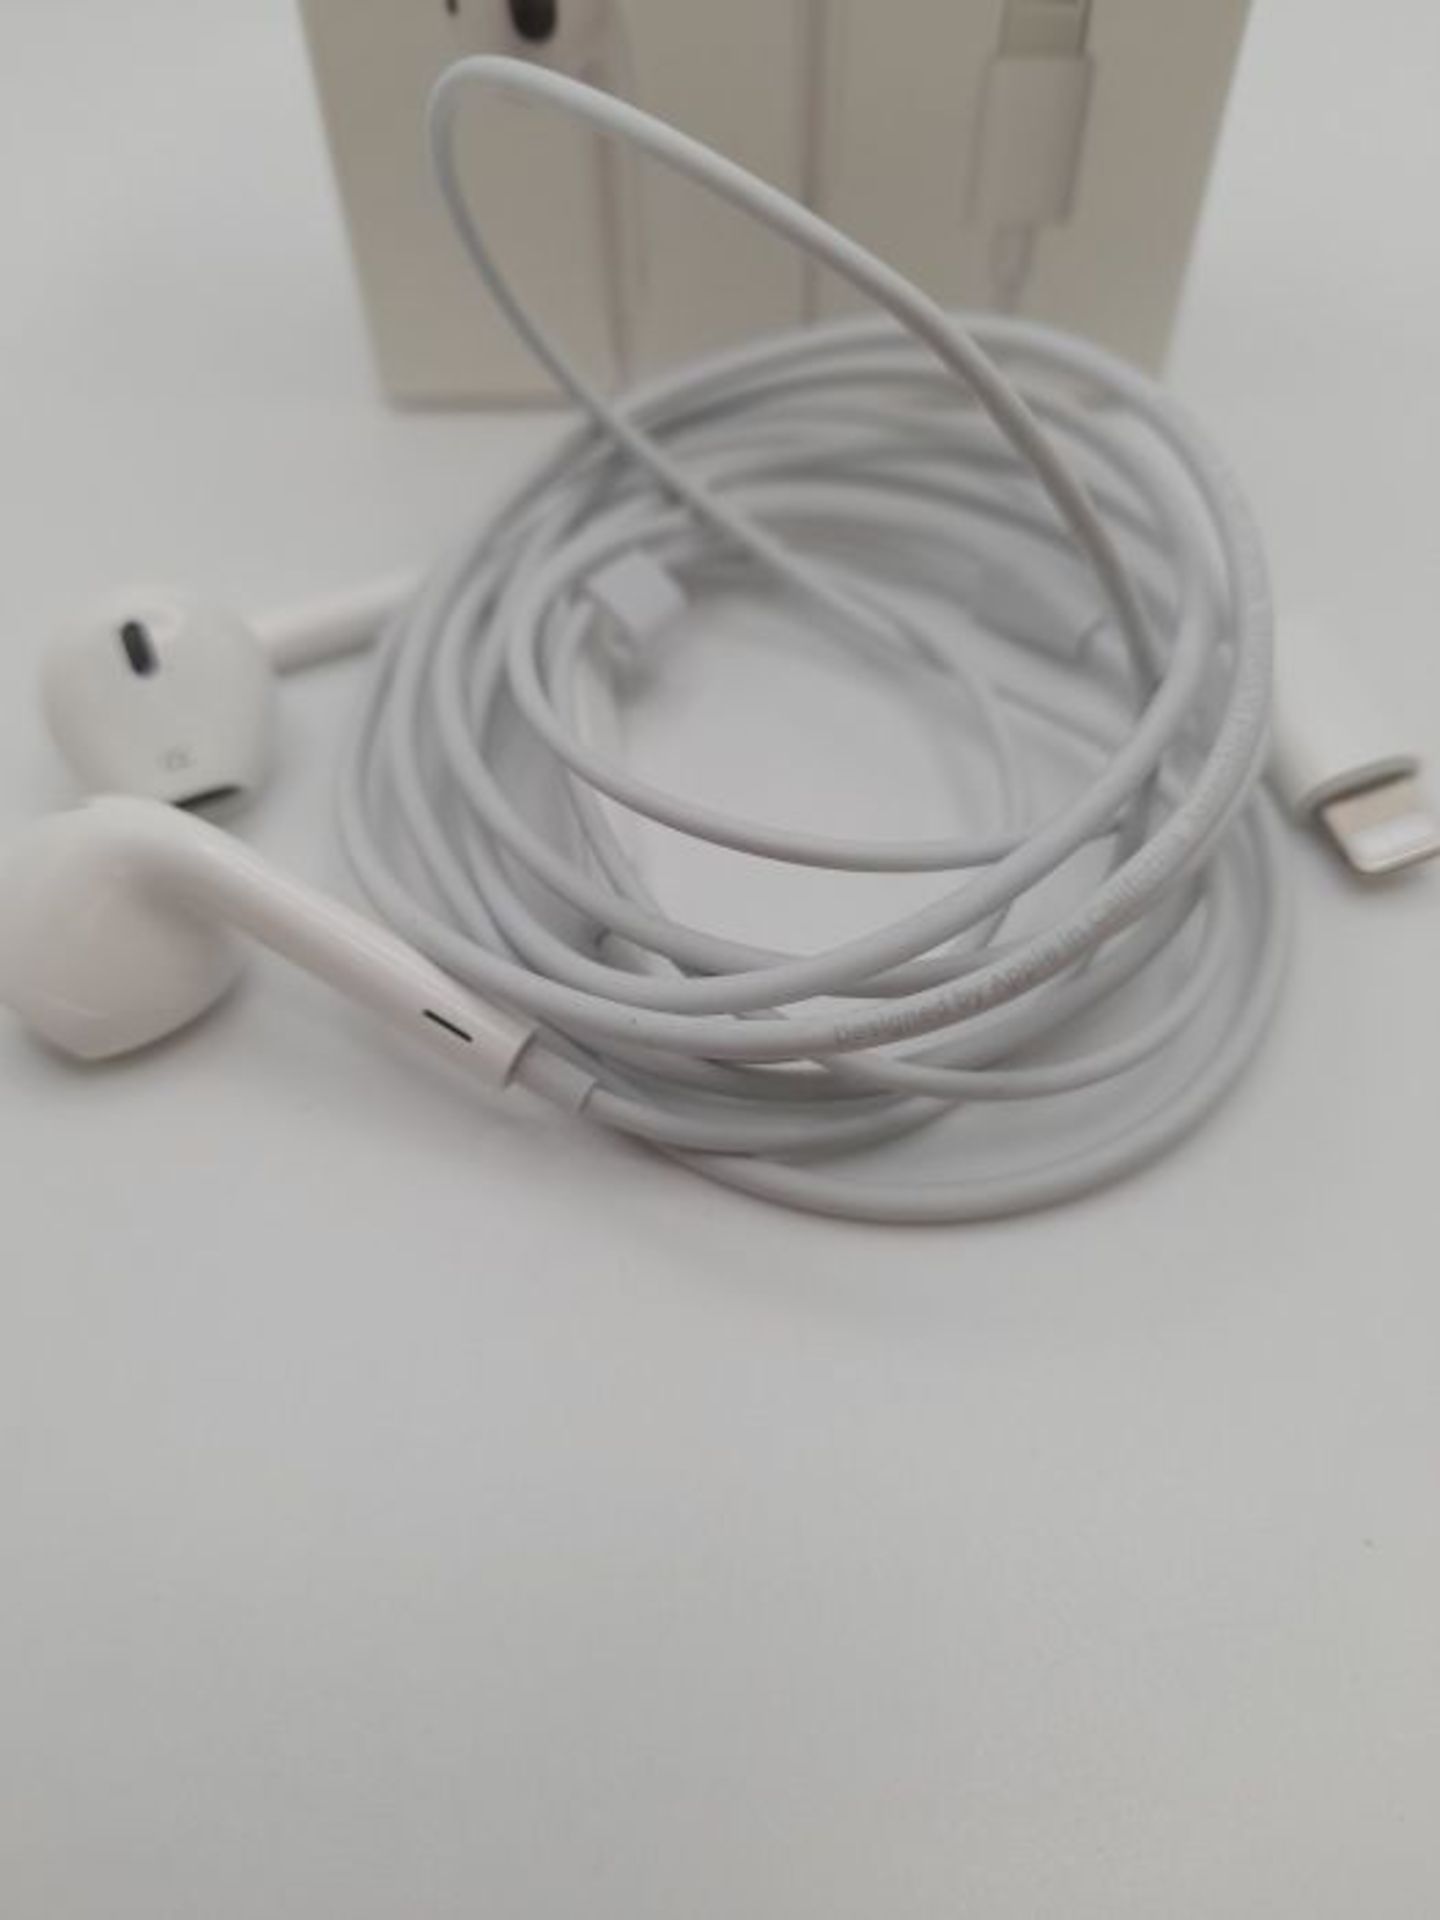 Auricolari Apple EarPods con connettore Lightning - Image 3 of 3